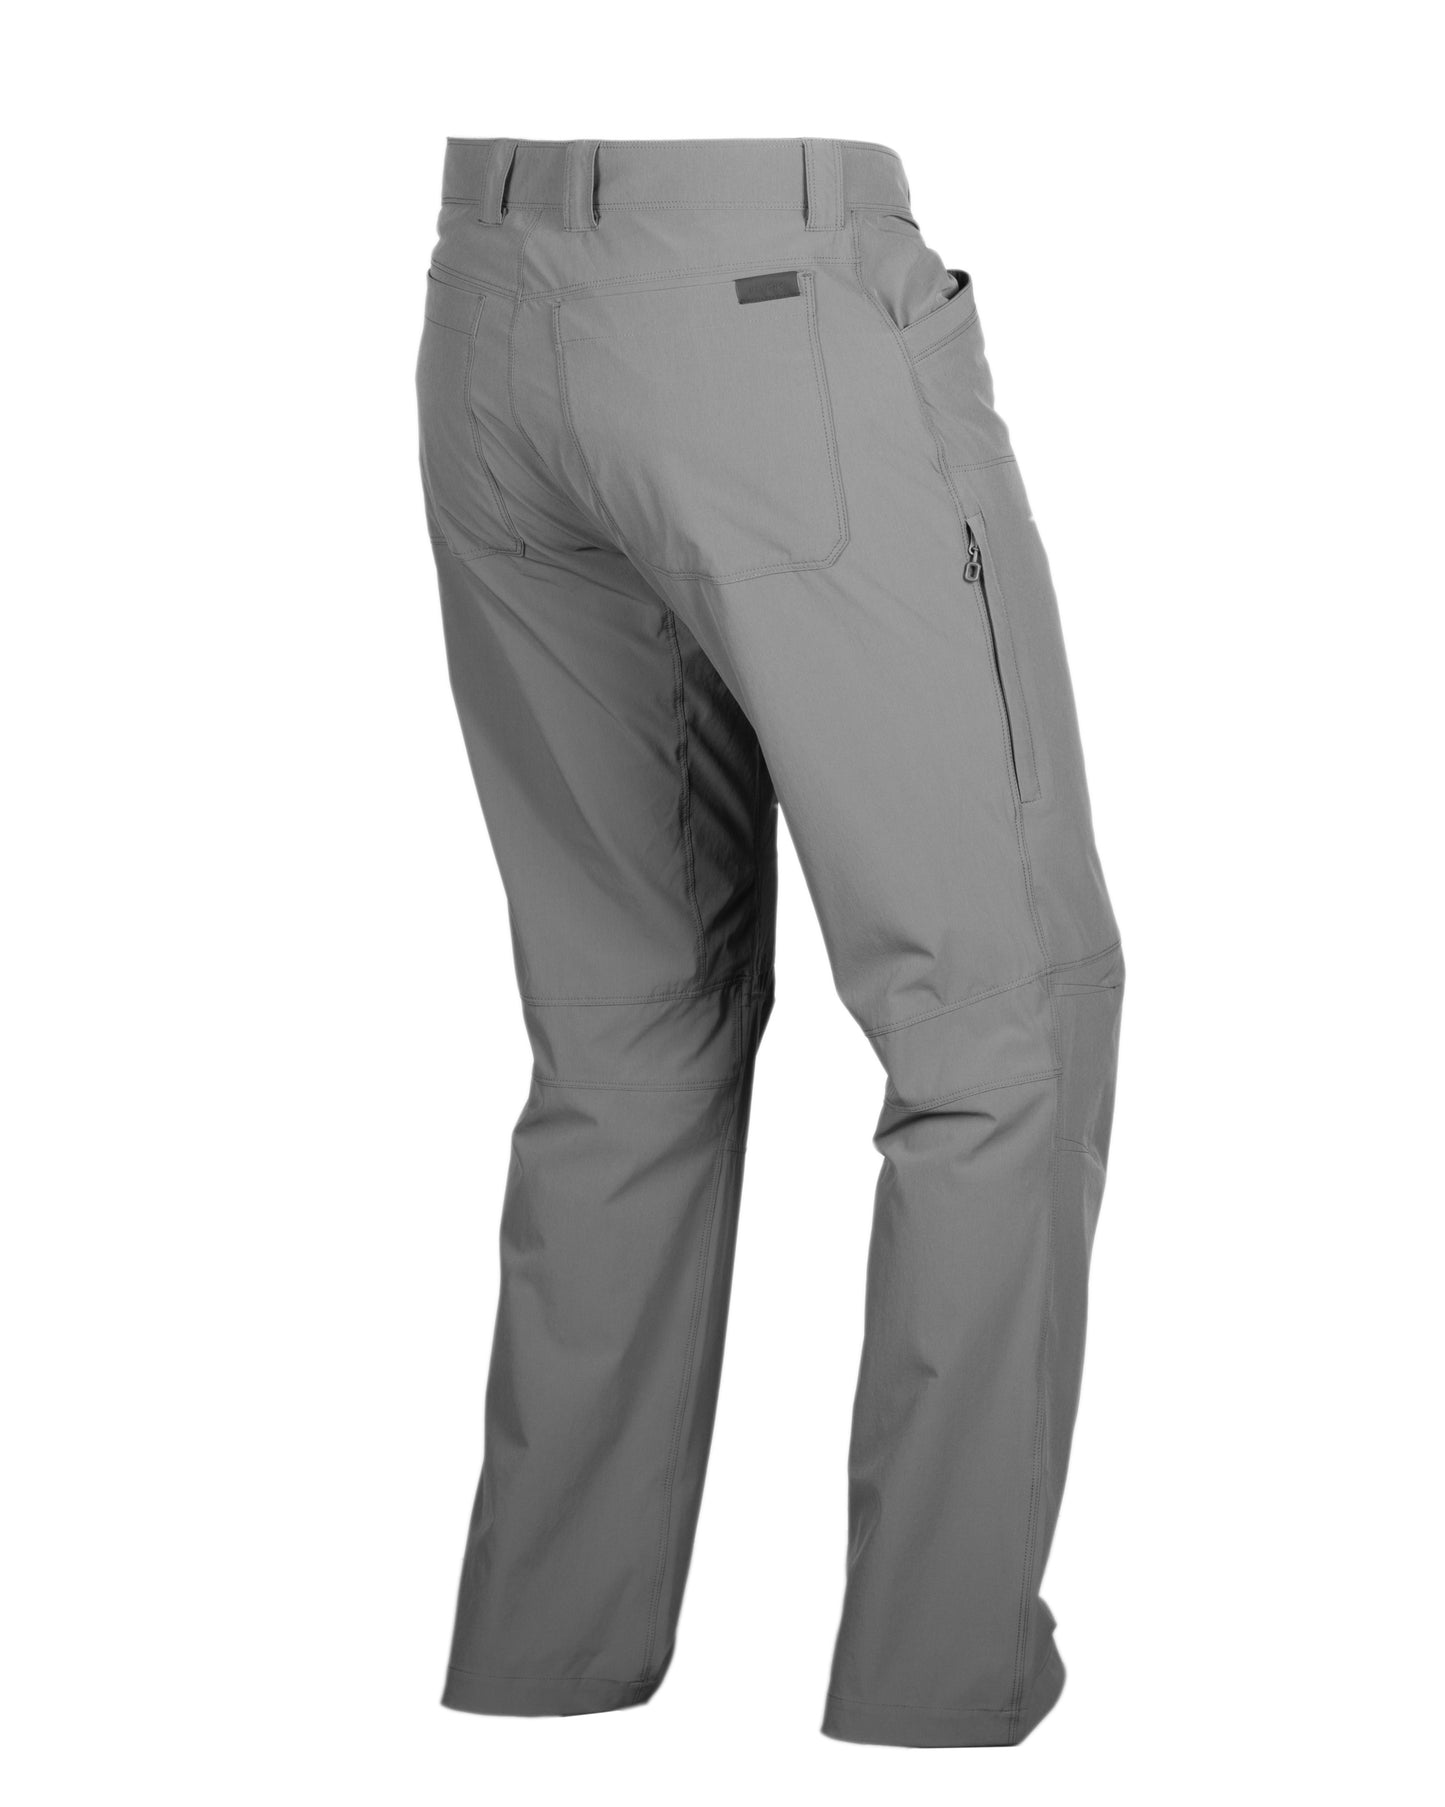 L4 - Ventum Ultralight Pant - Beyond Clothing USA 